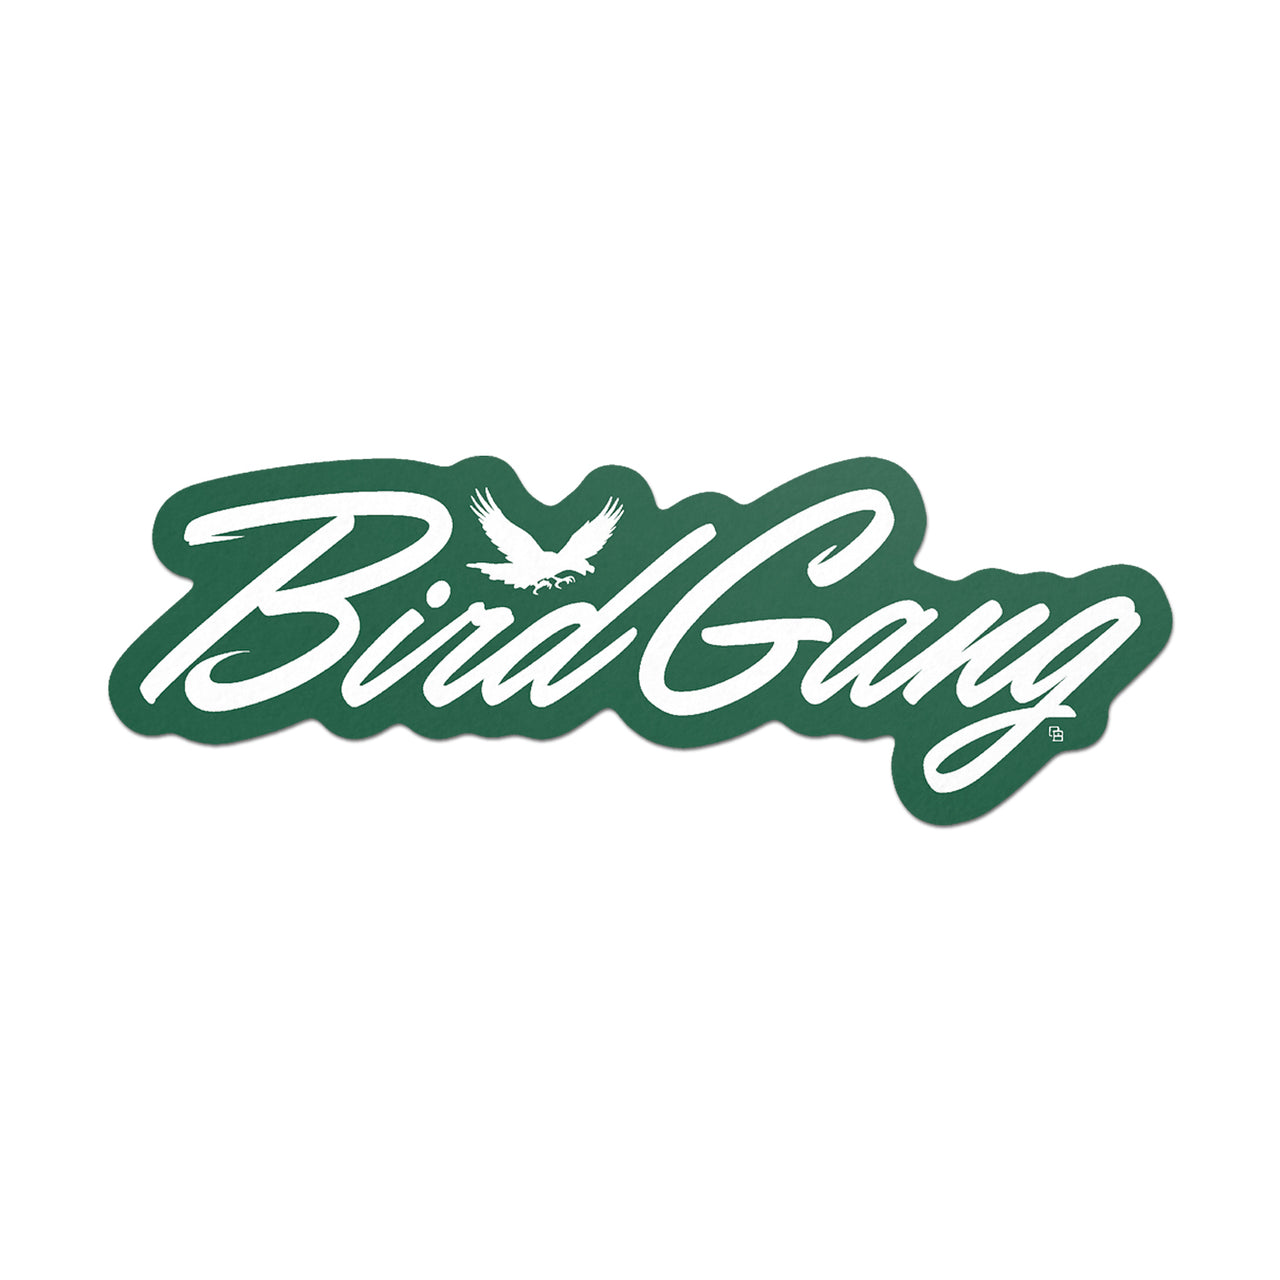 "Bird Gang" White Sticker